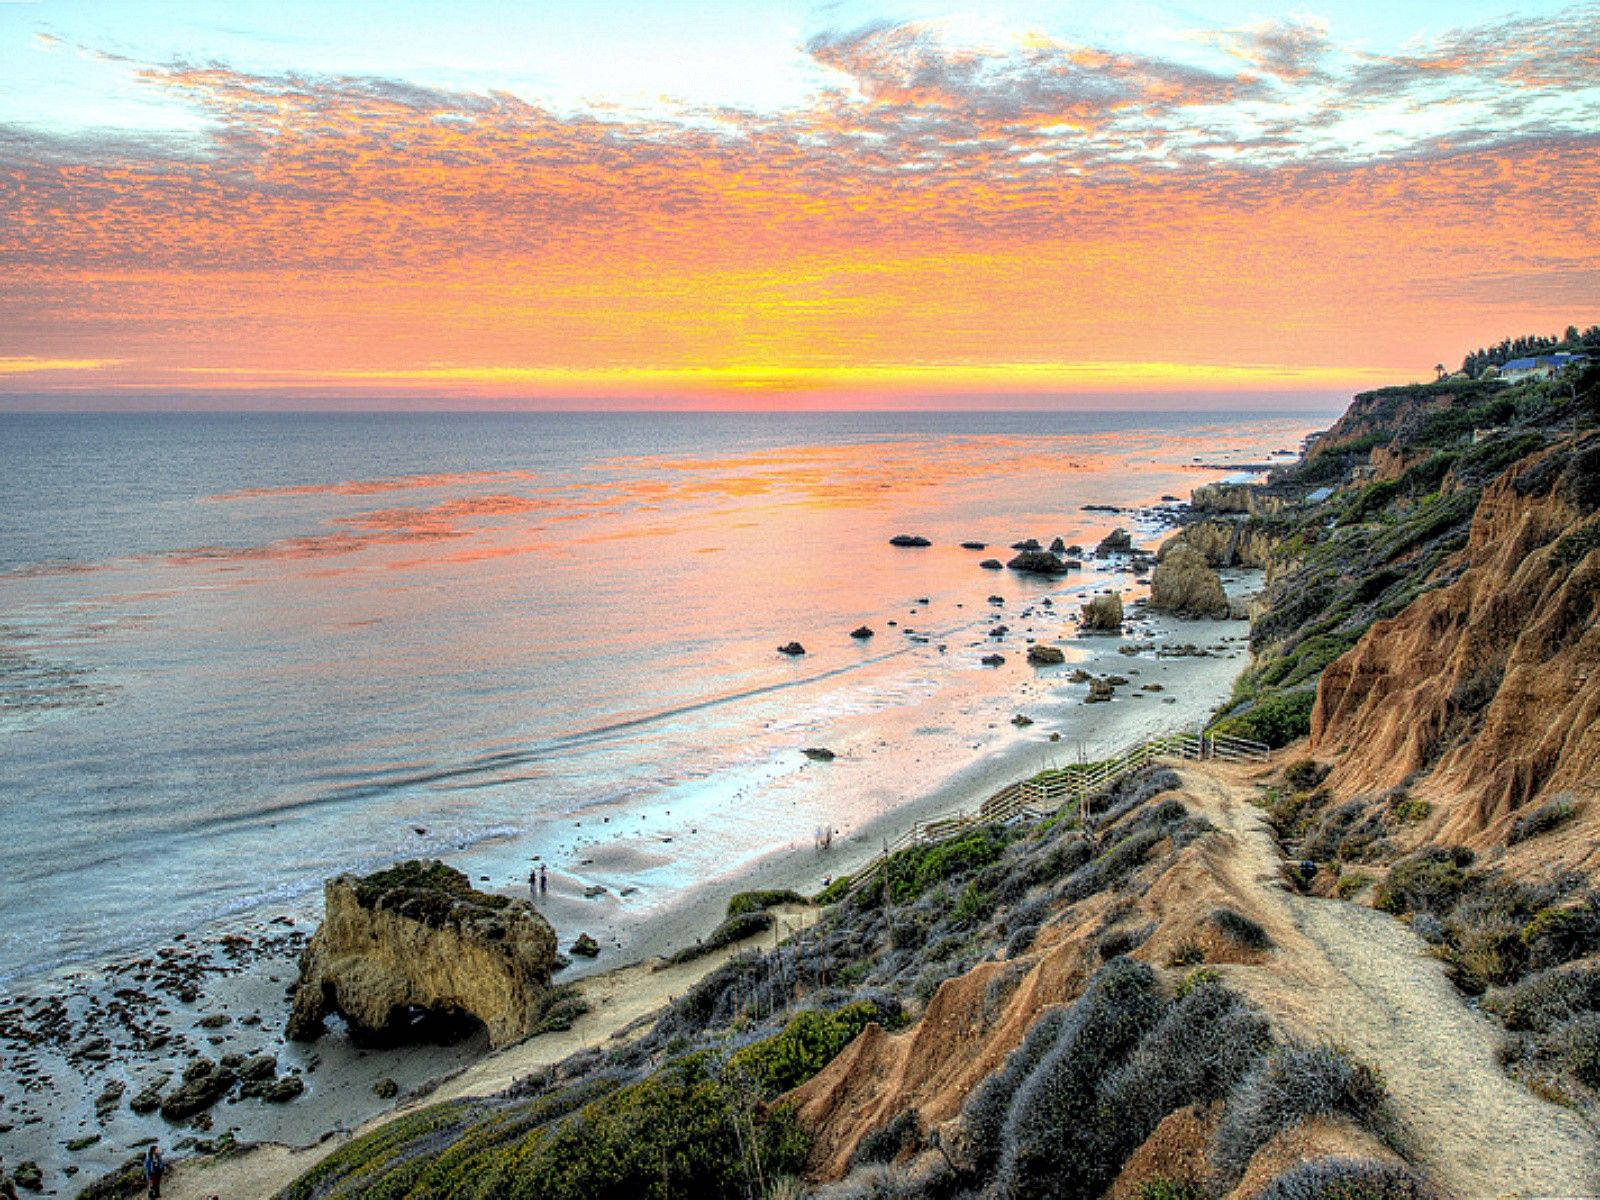 The stunning beach view at Malibu, California Wallpaper